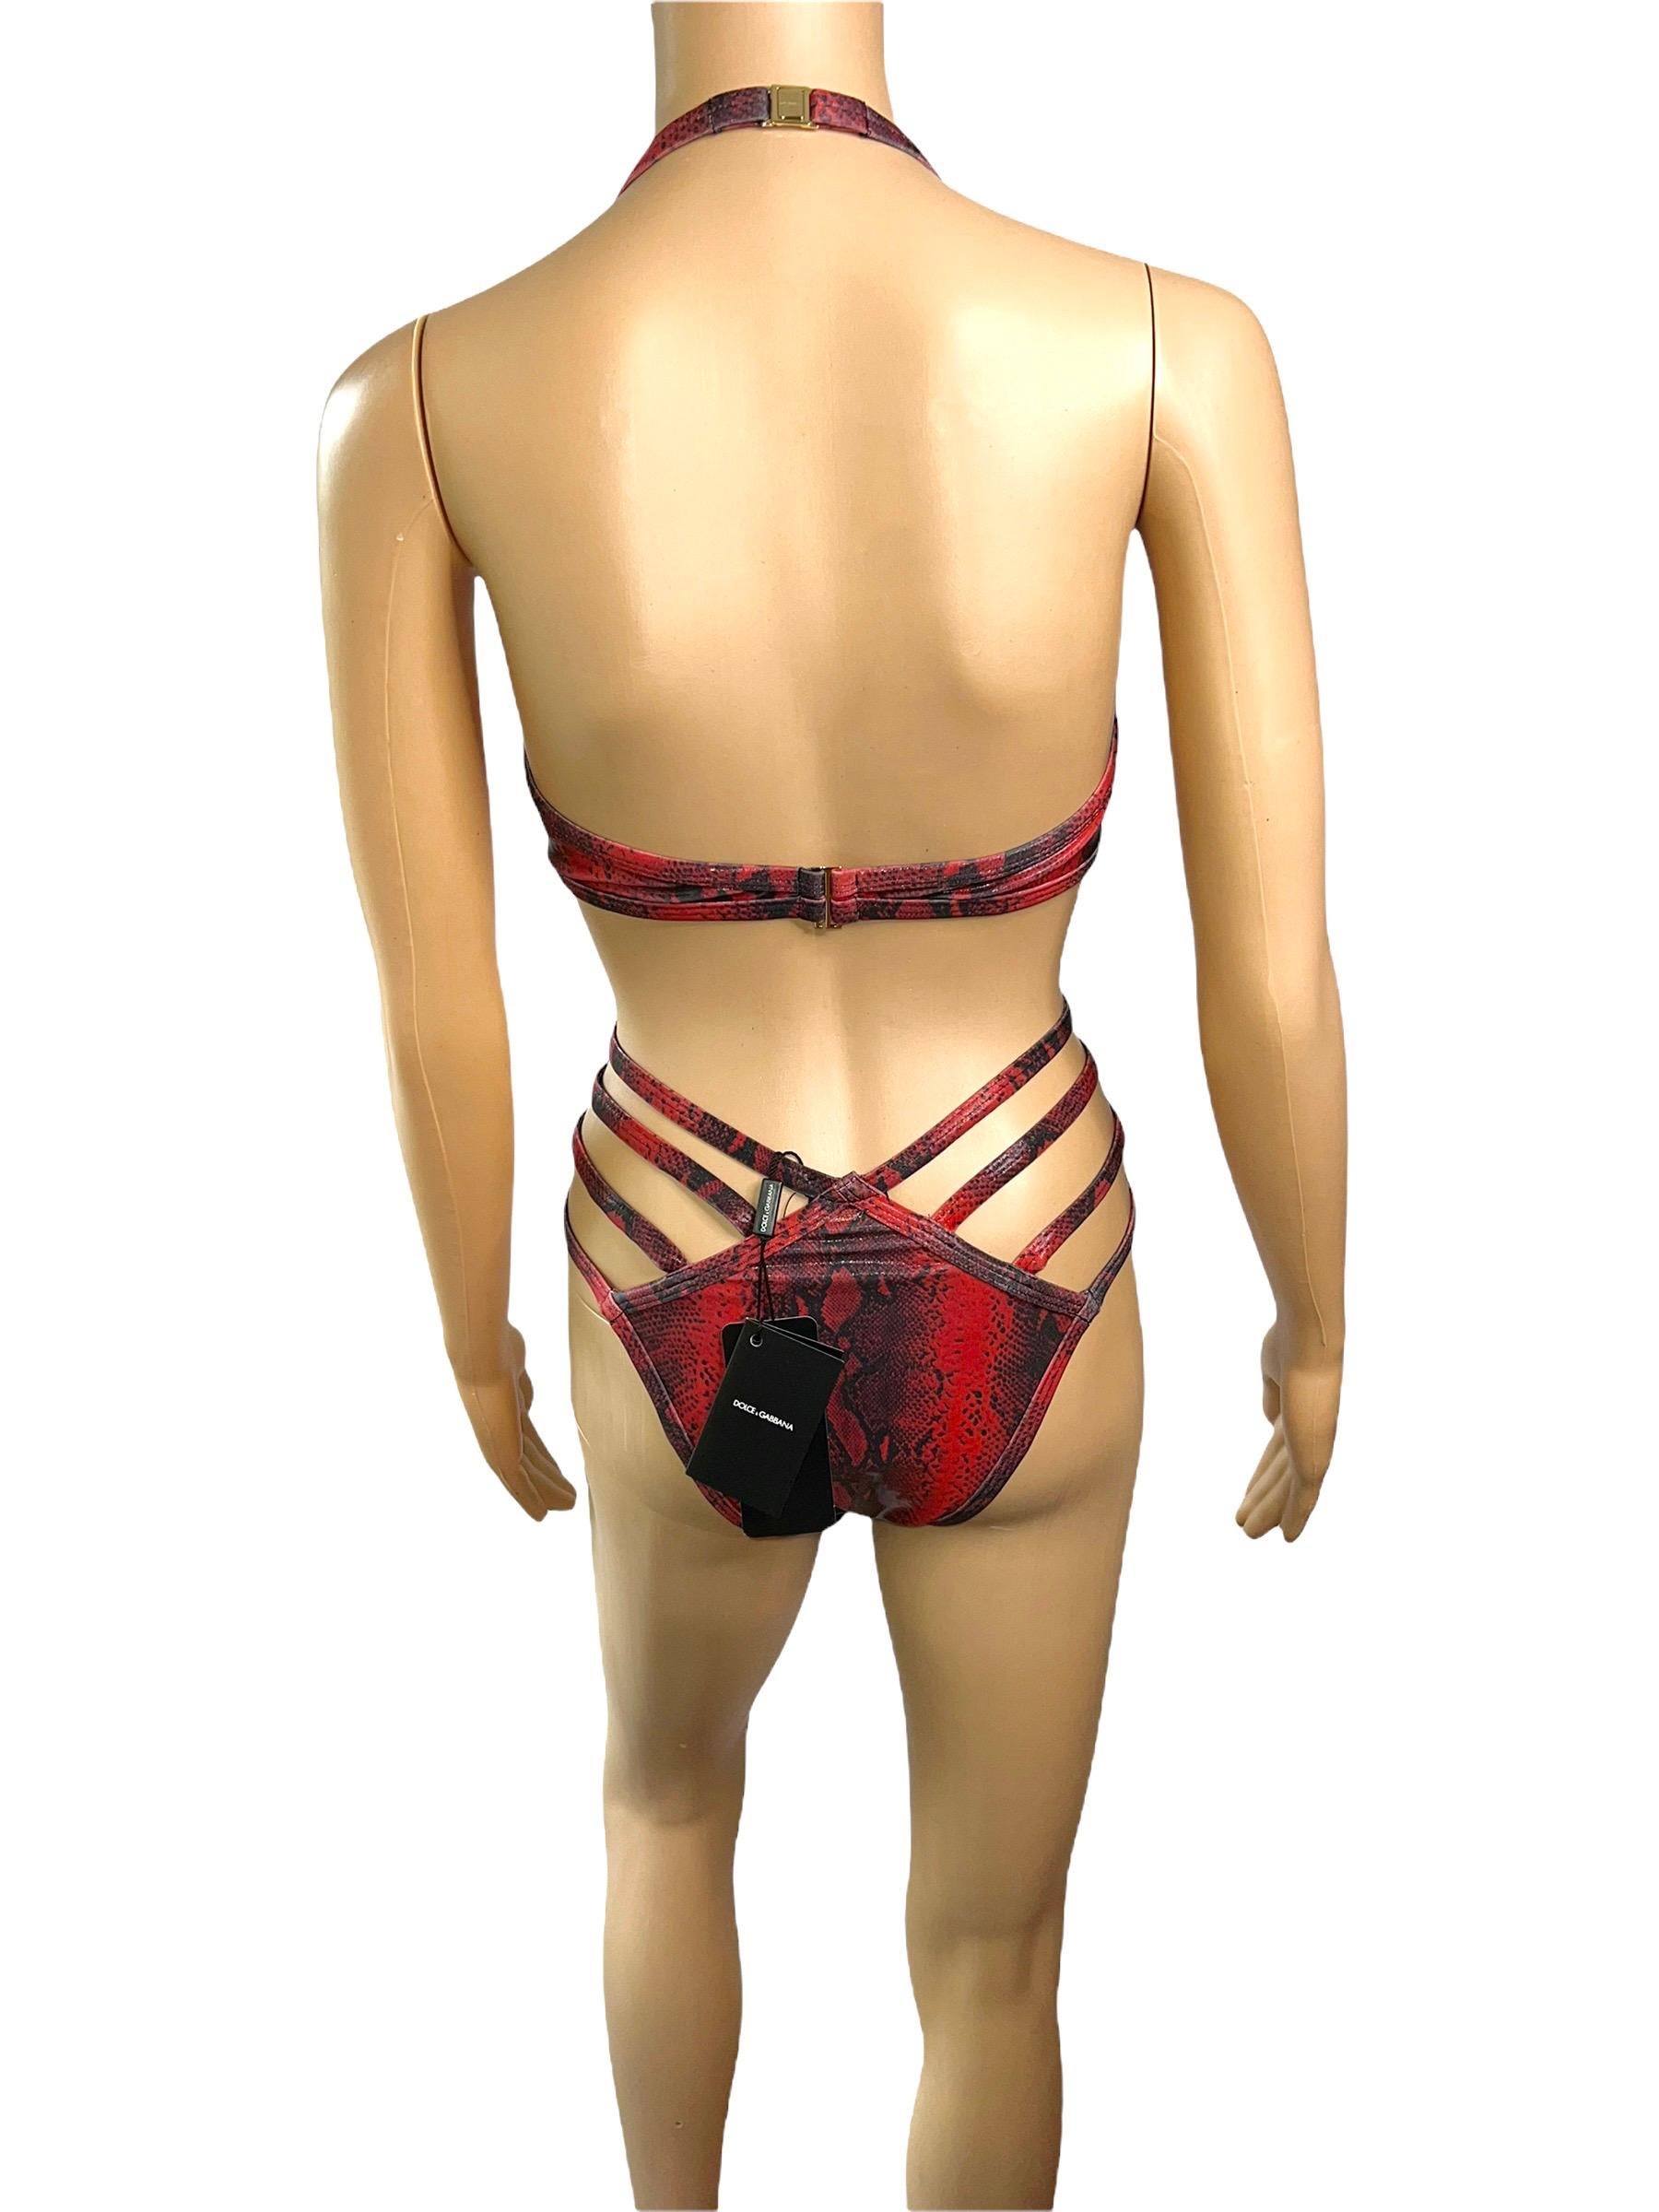 Dolce & Gabbana Unworn Logo Cutout Strappy Bodysuit Monokini Swimsuit Swimwear For Sale 1